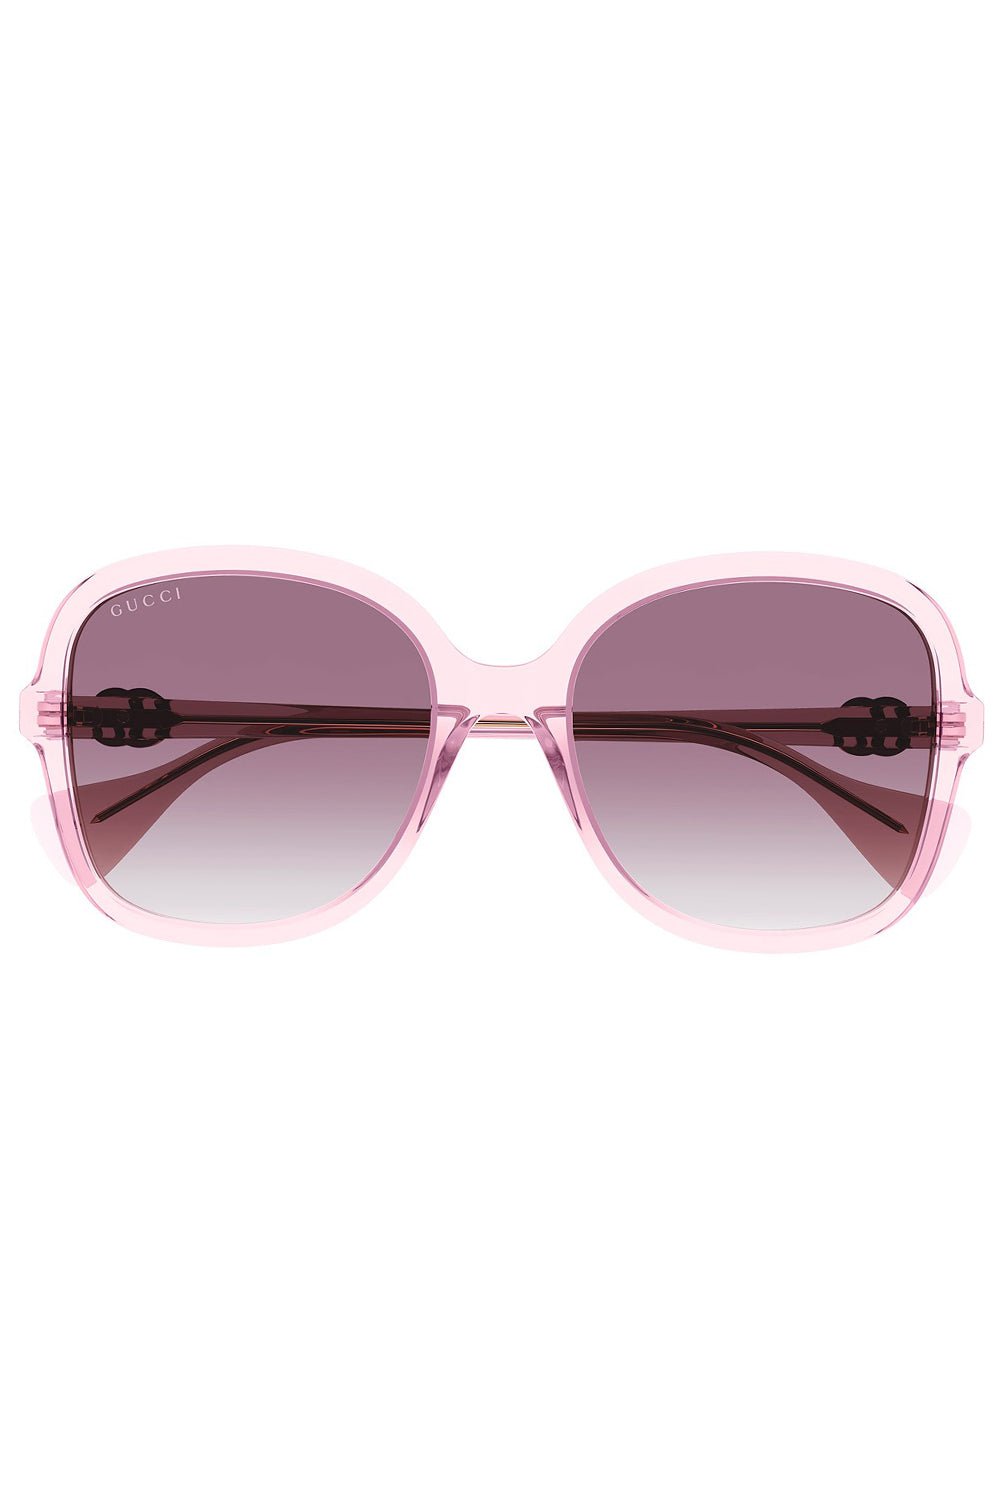 GUCCI-Oversized Sunglasses-PINK/VIOLET